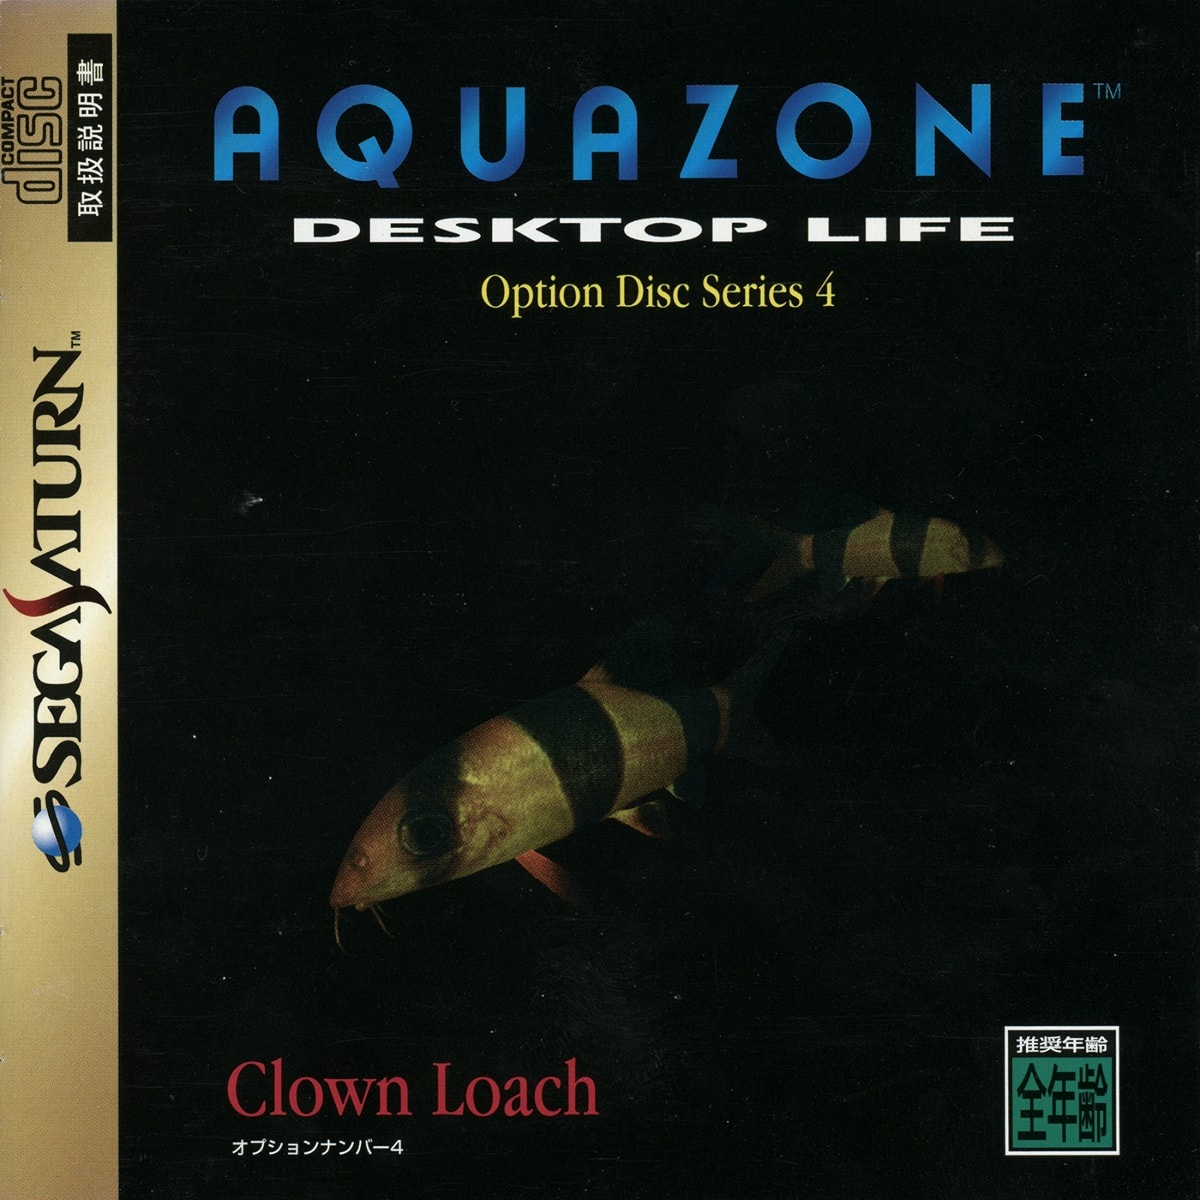 Capa do jogo Aquazone Option Disc Series 4 Clown Loach